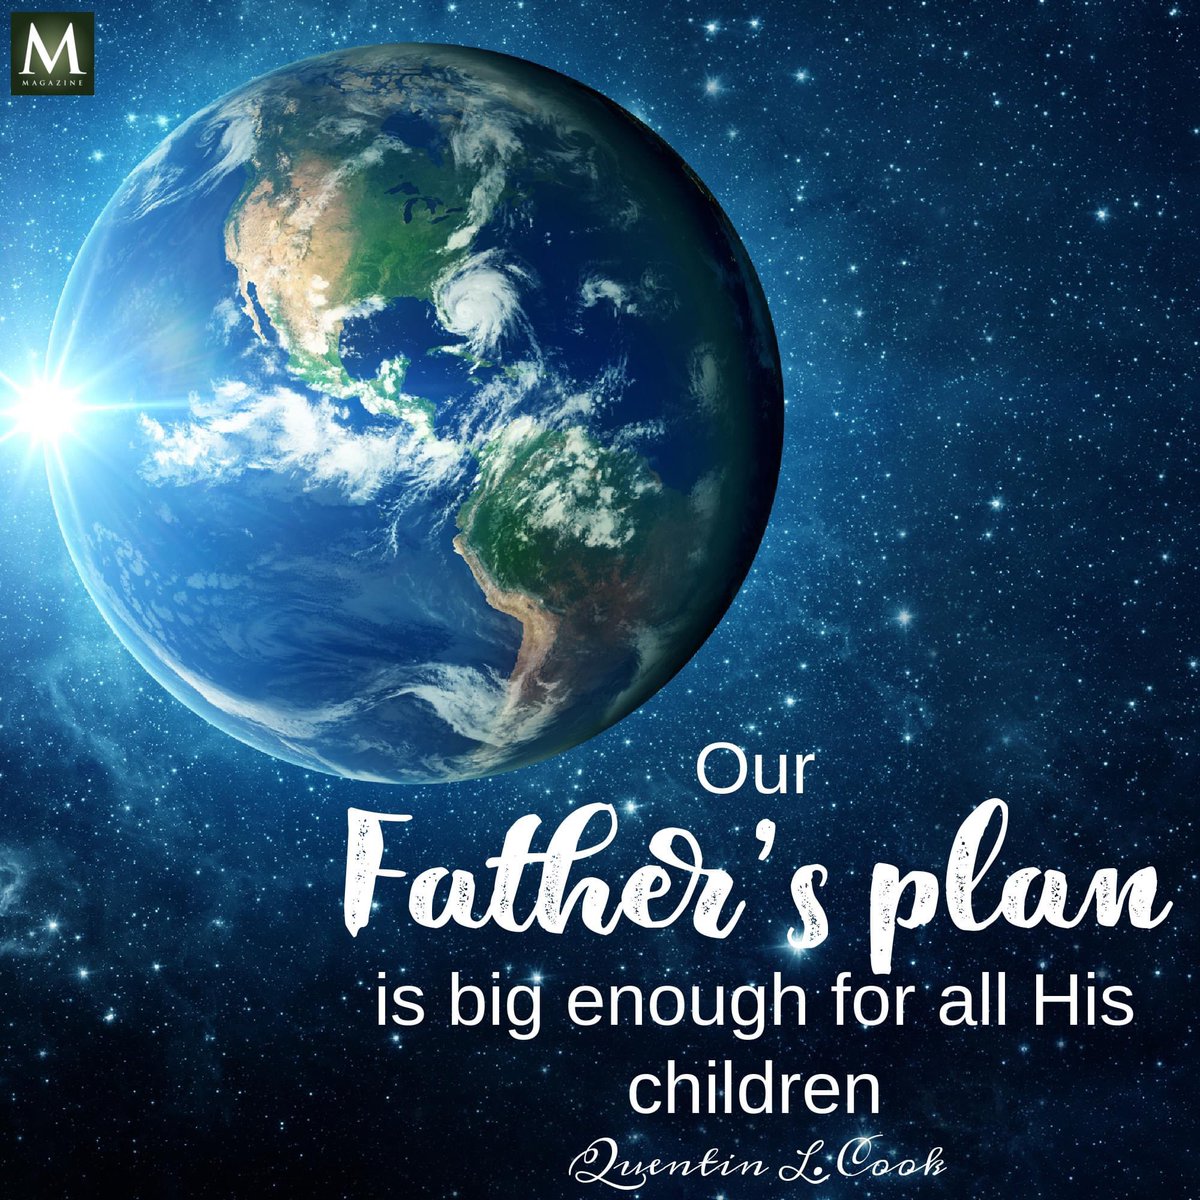 'Our Father’s plan is big enough for all His children.' ~ Elder Quentin L. Cook 

#TrustGod #ShareGoodness #HisDay #ChildrenOfGod #CountOnHim #WordOfGod #HearHim #ComeUntoChrist #BestDay #TheChurchOfJesusChristOfLatterDaySaints